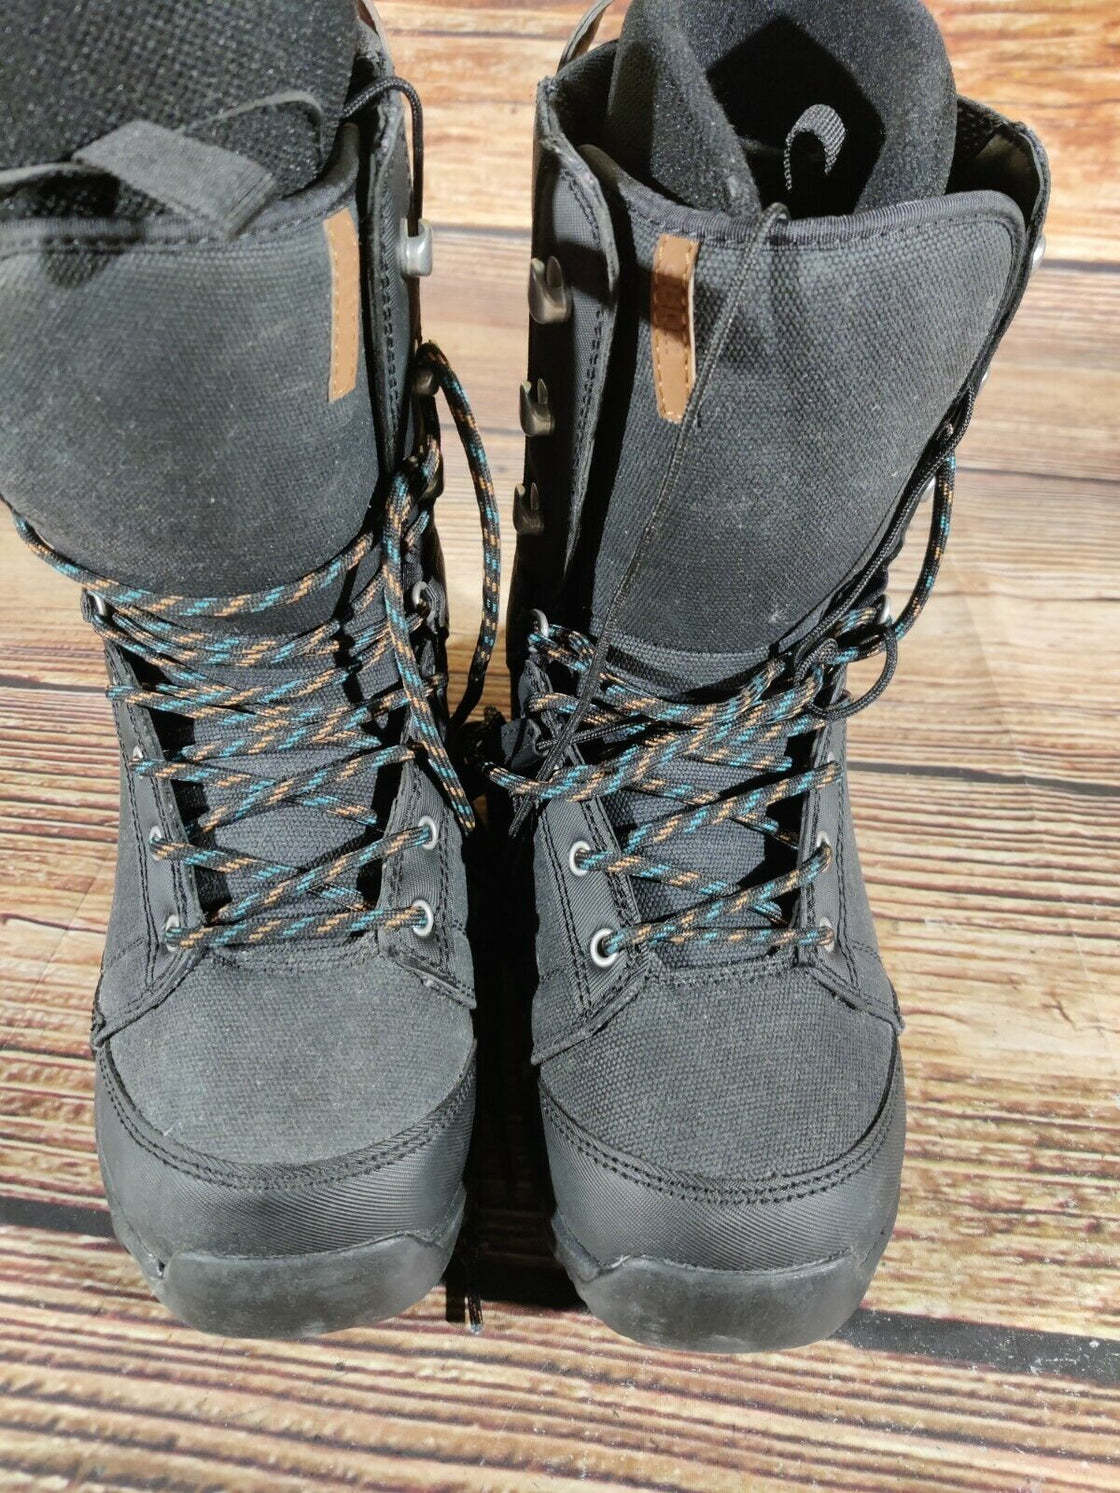 WARP Snowboard Boots Size EU42, US8, UK7, Mondo 260 mm C